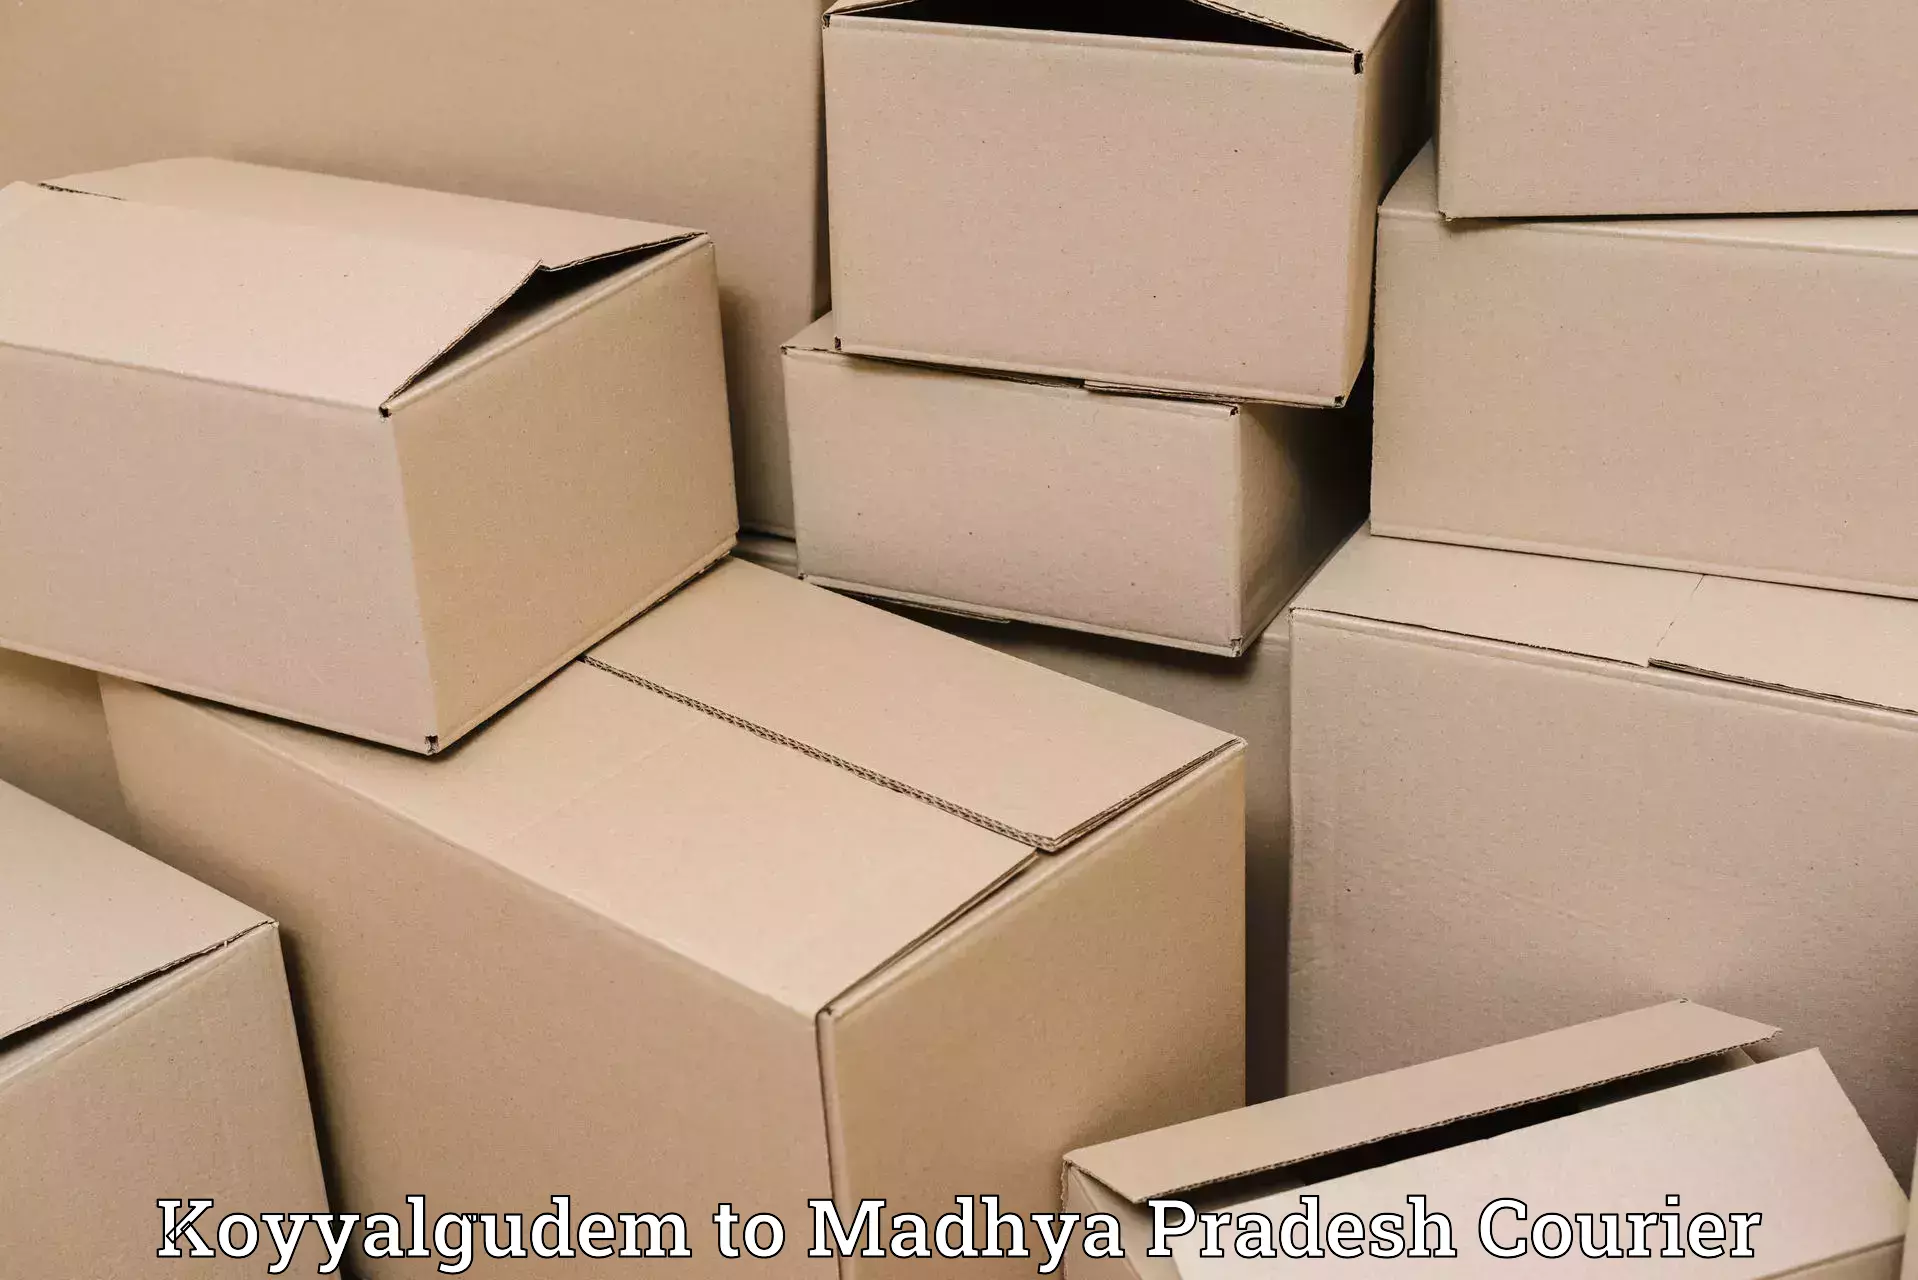 Express delivery capabilities Koyyalgudem to Satna